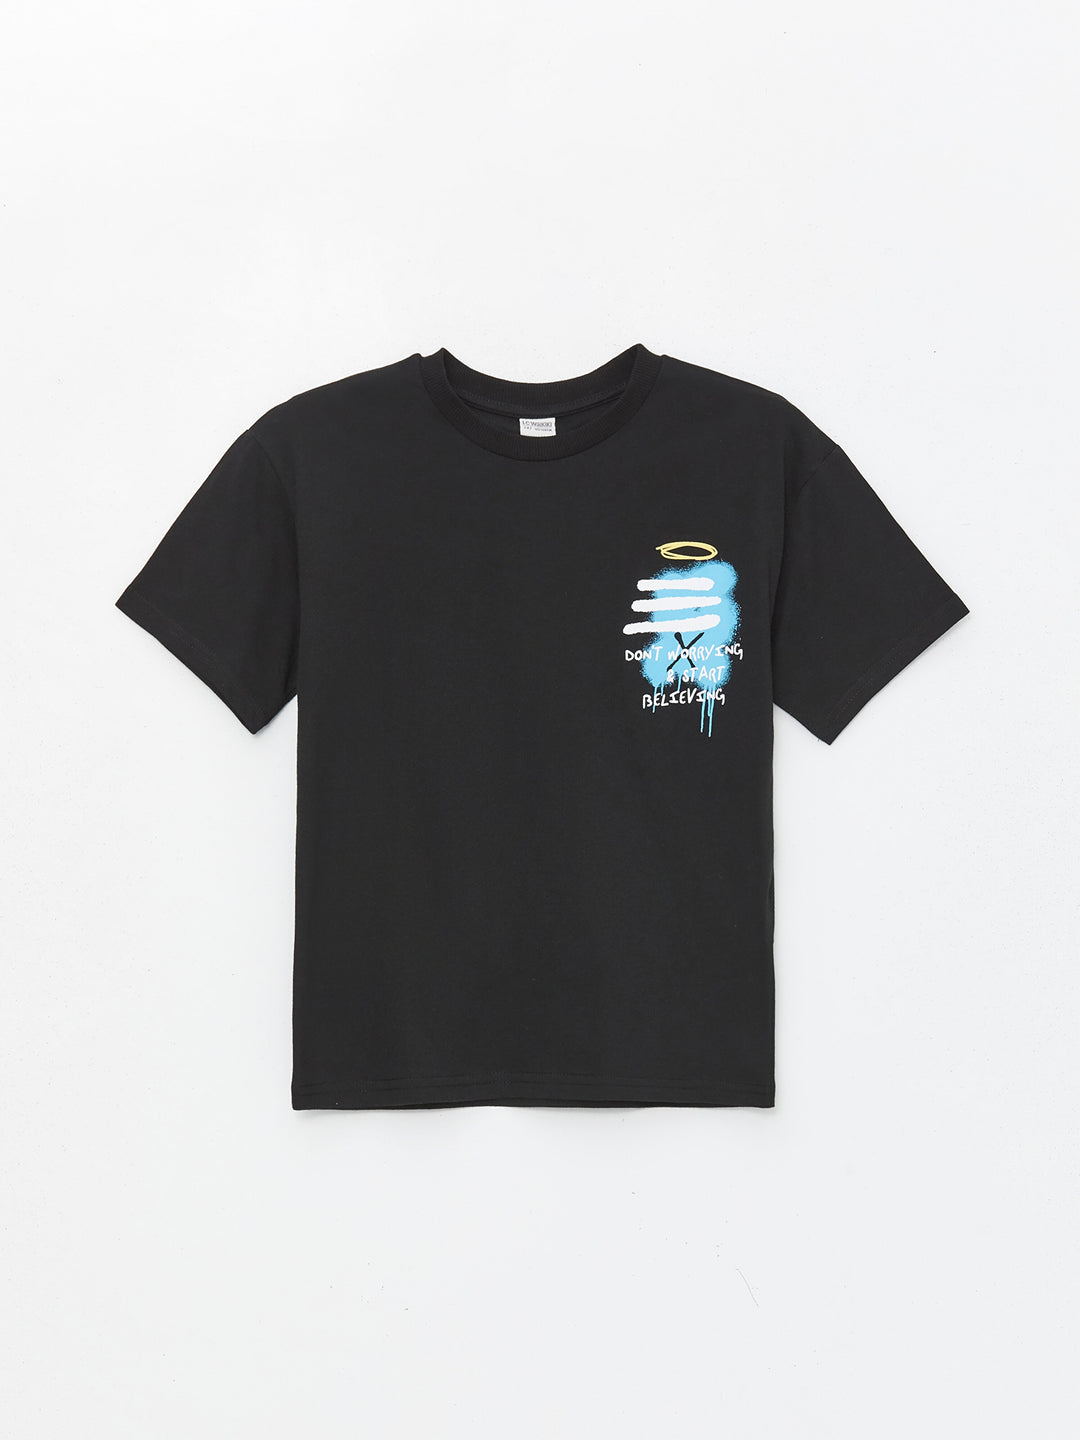 Crew Neck Printed Short Sleeve Boys' T-Shirt